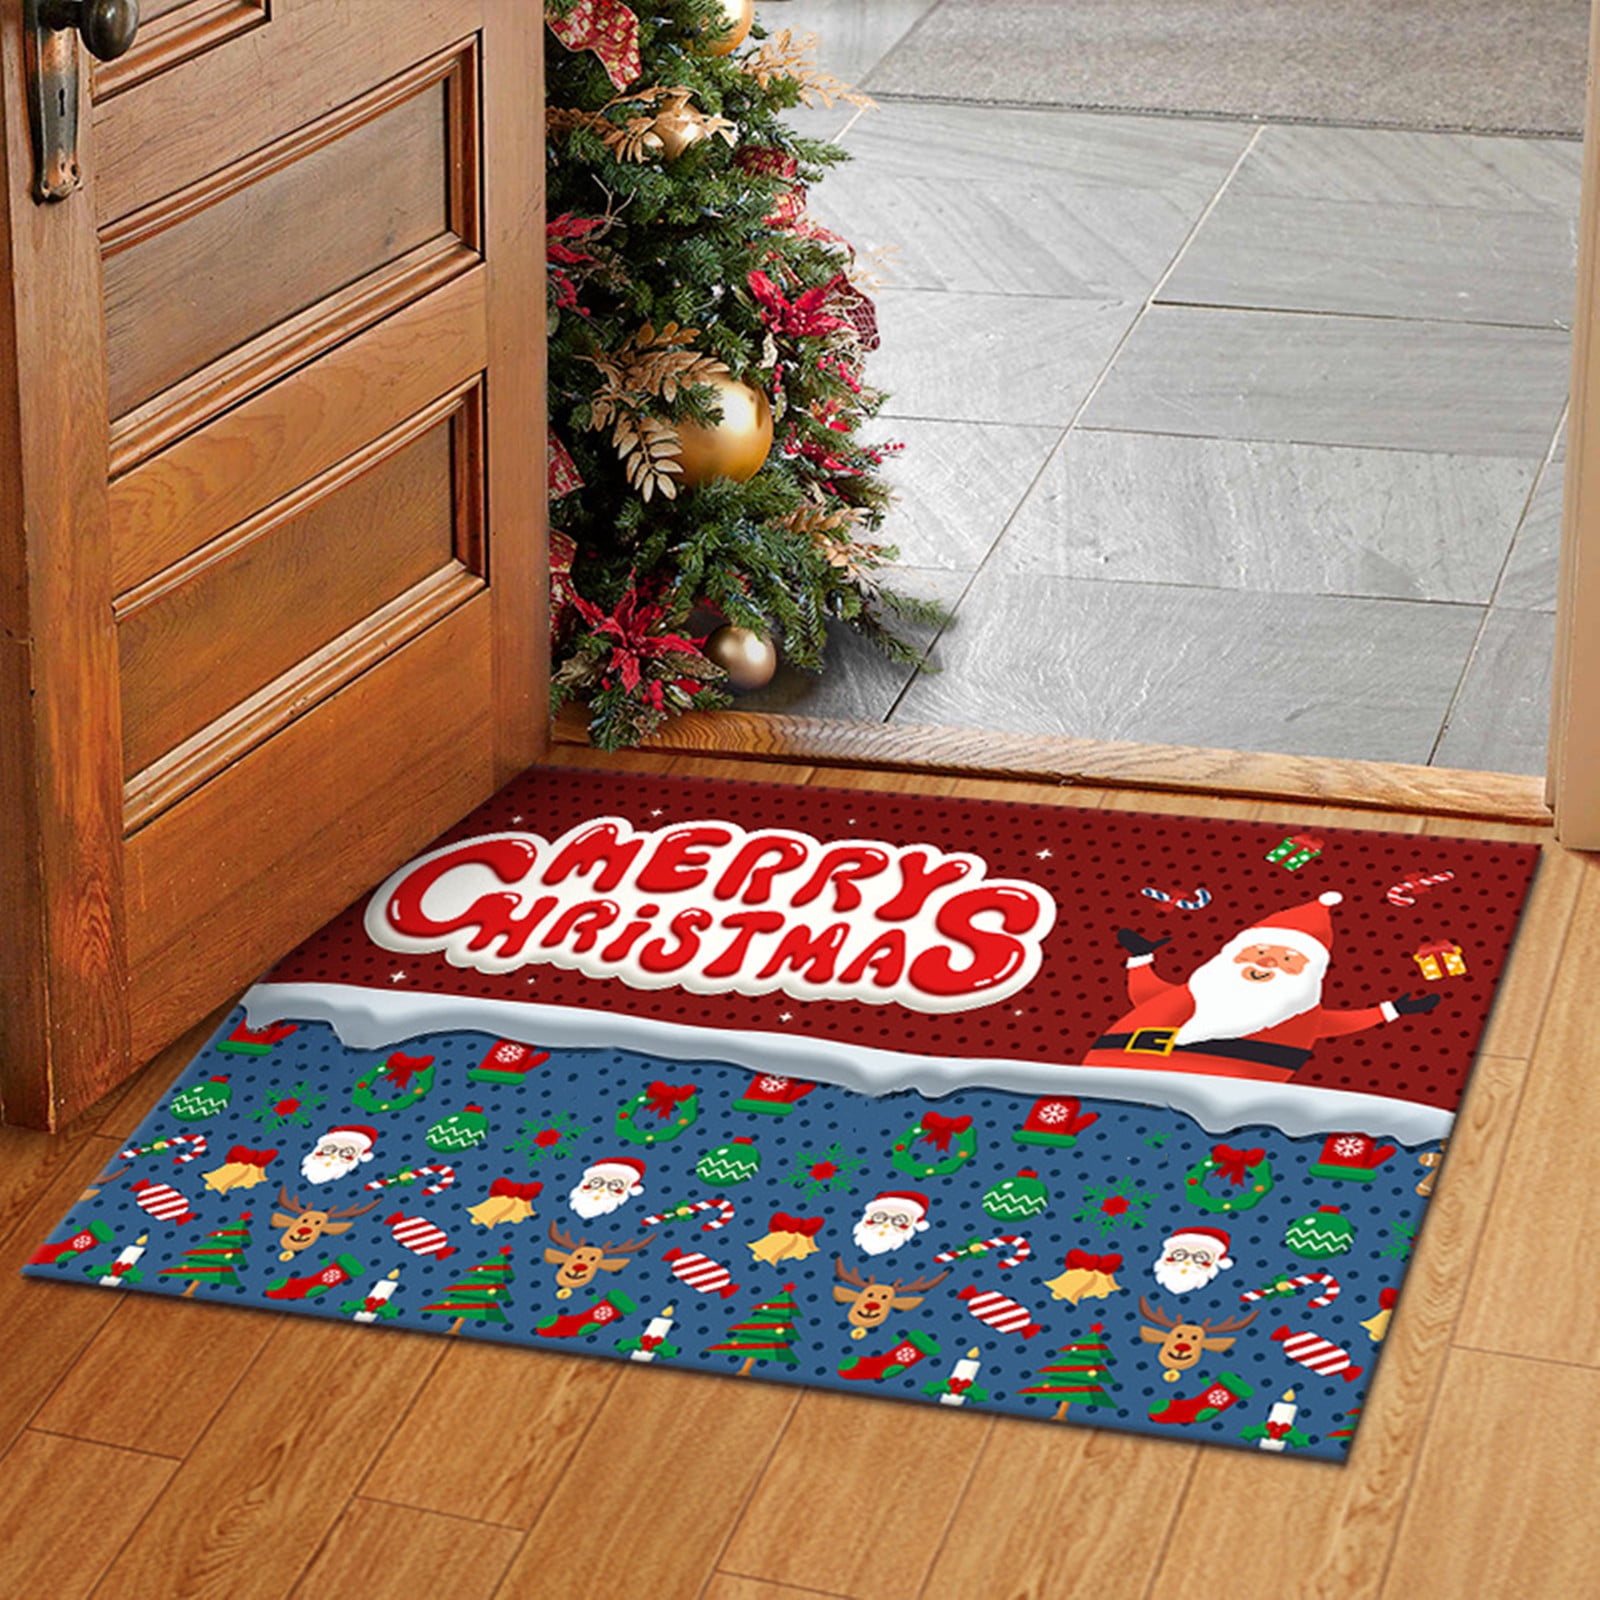 New! Mohawk Holiday Heavy Duty Doormat 24x36 Winter Christmas Snow